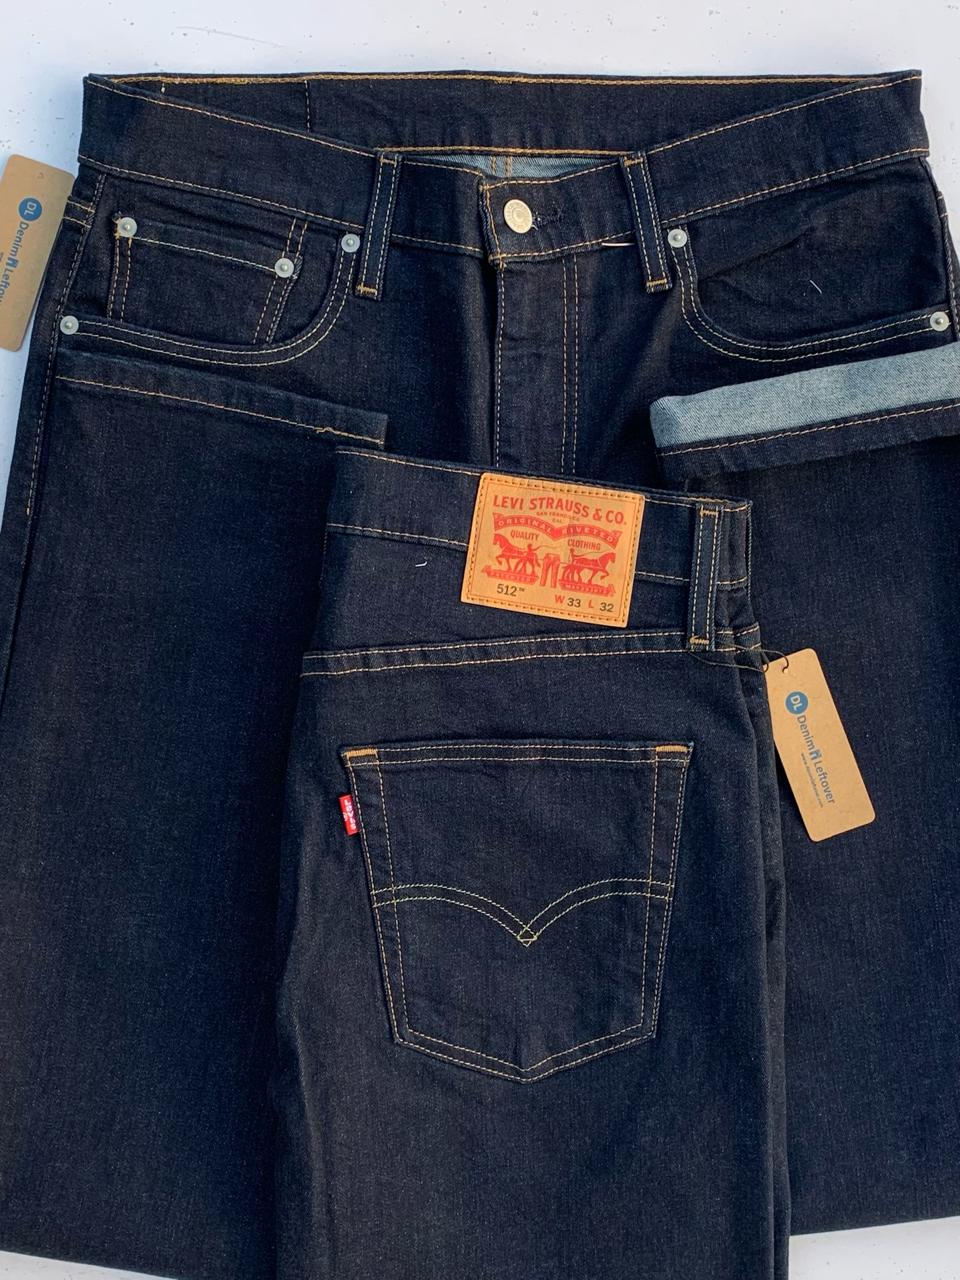 Men's 512 Slim Taper Fit Dark Blue Jean DL4238